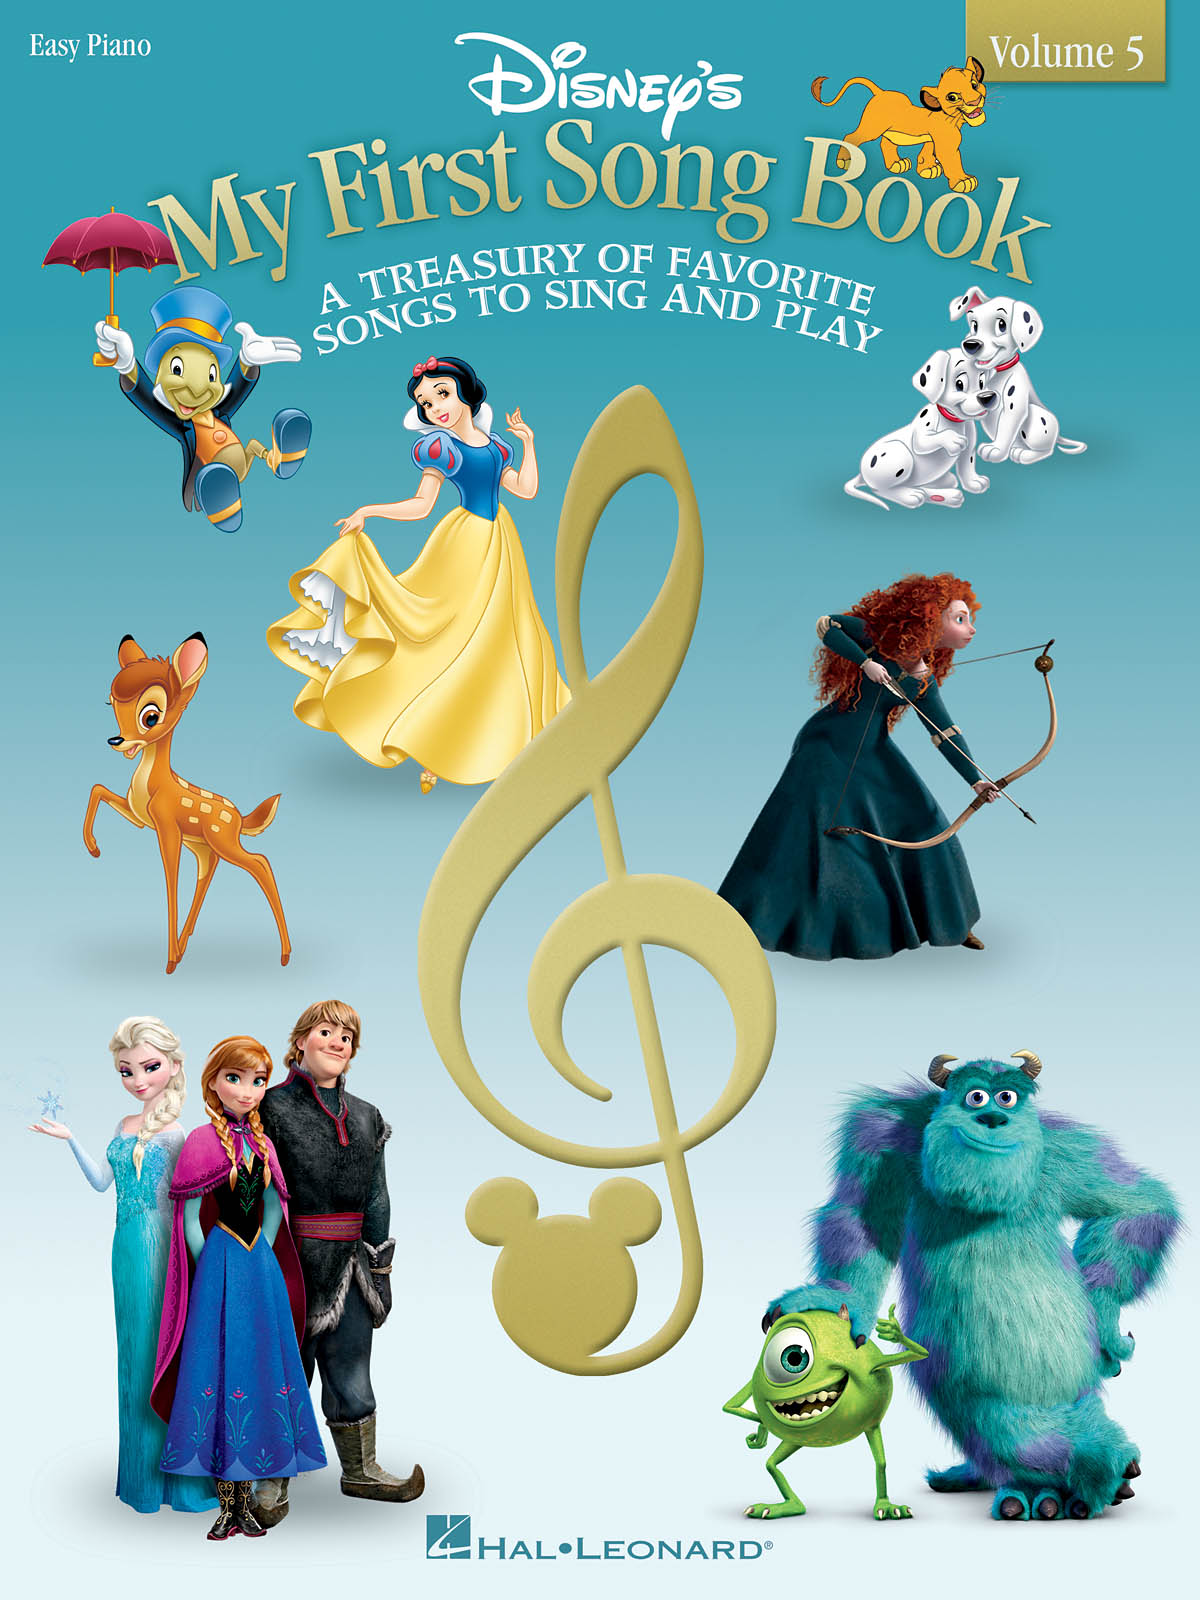 Disney's My First Songbook Vol. 5 - filmové melodie pro děti